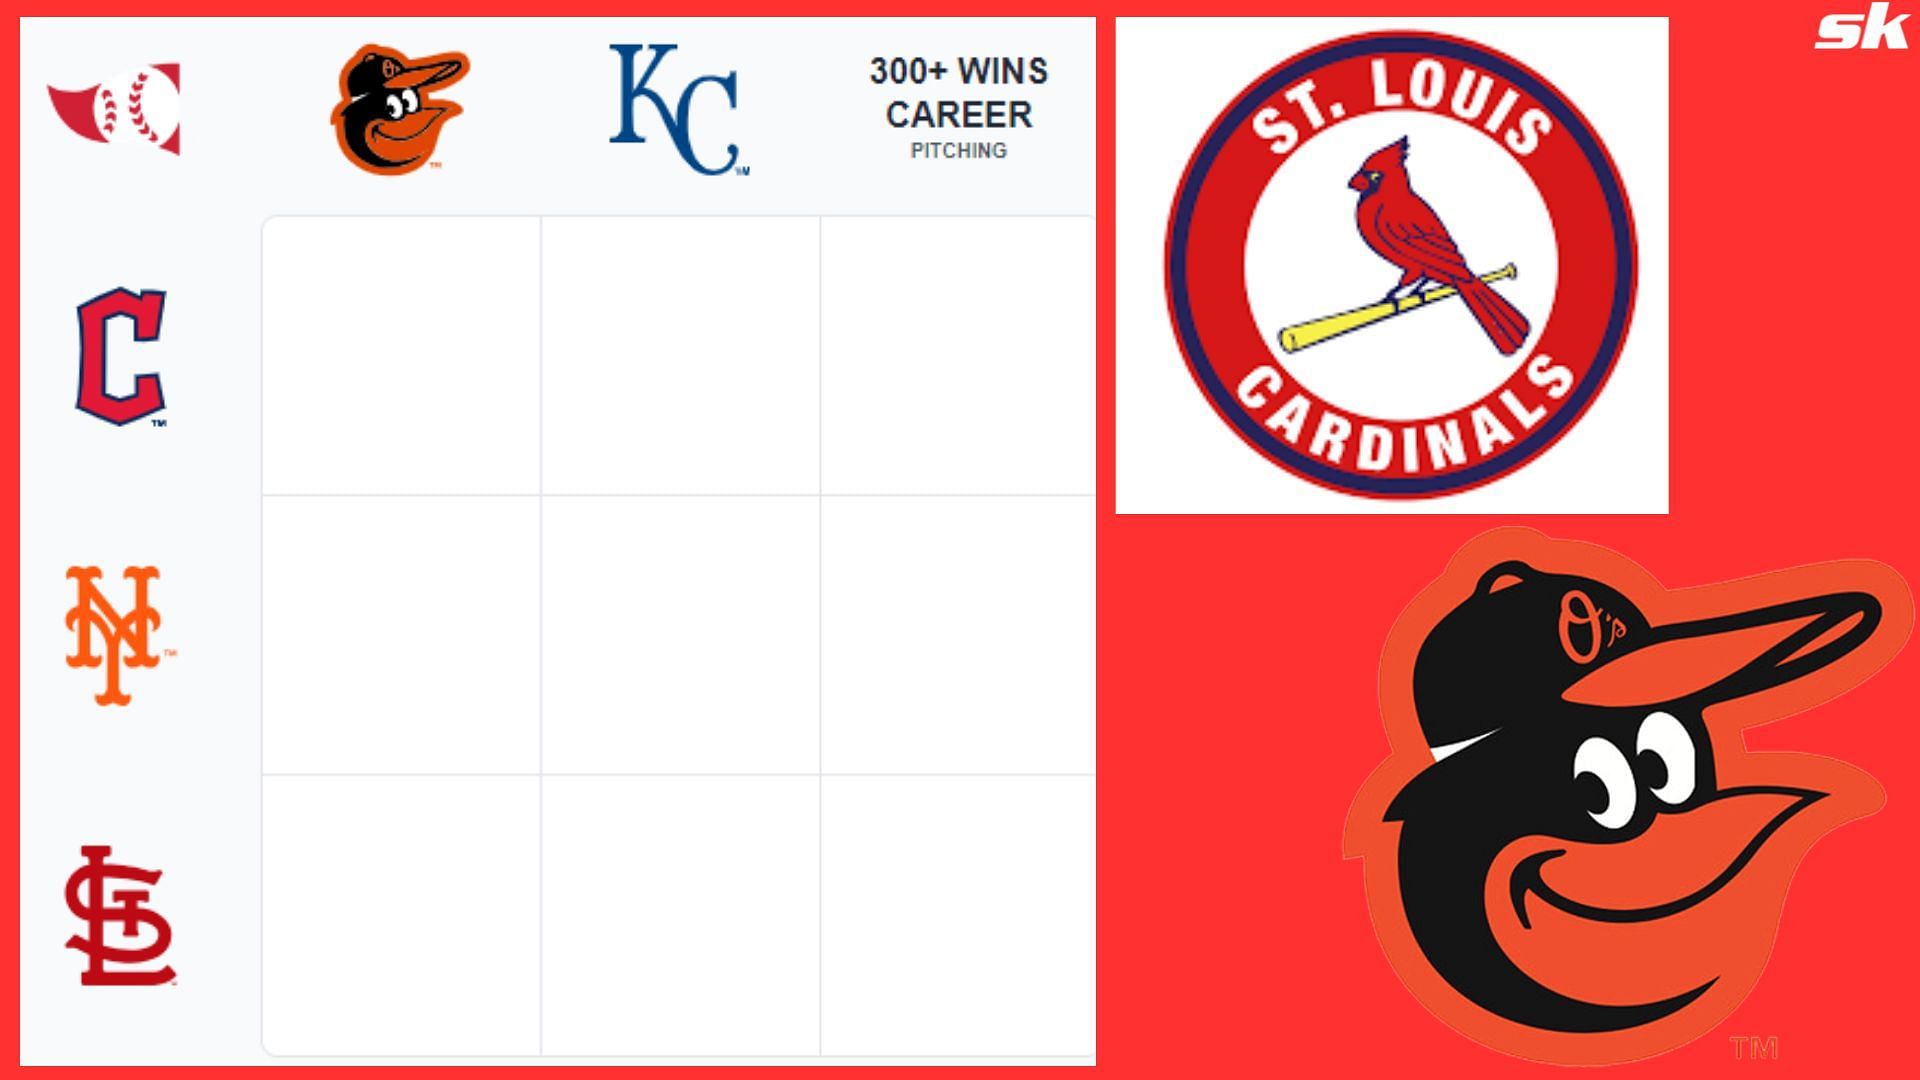 Orioles and Cardinals lineups - Blog